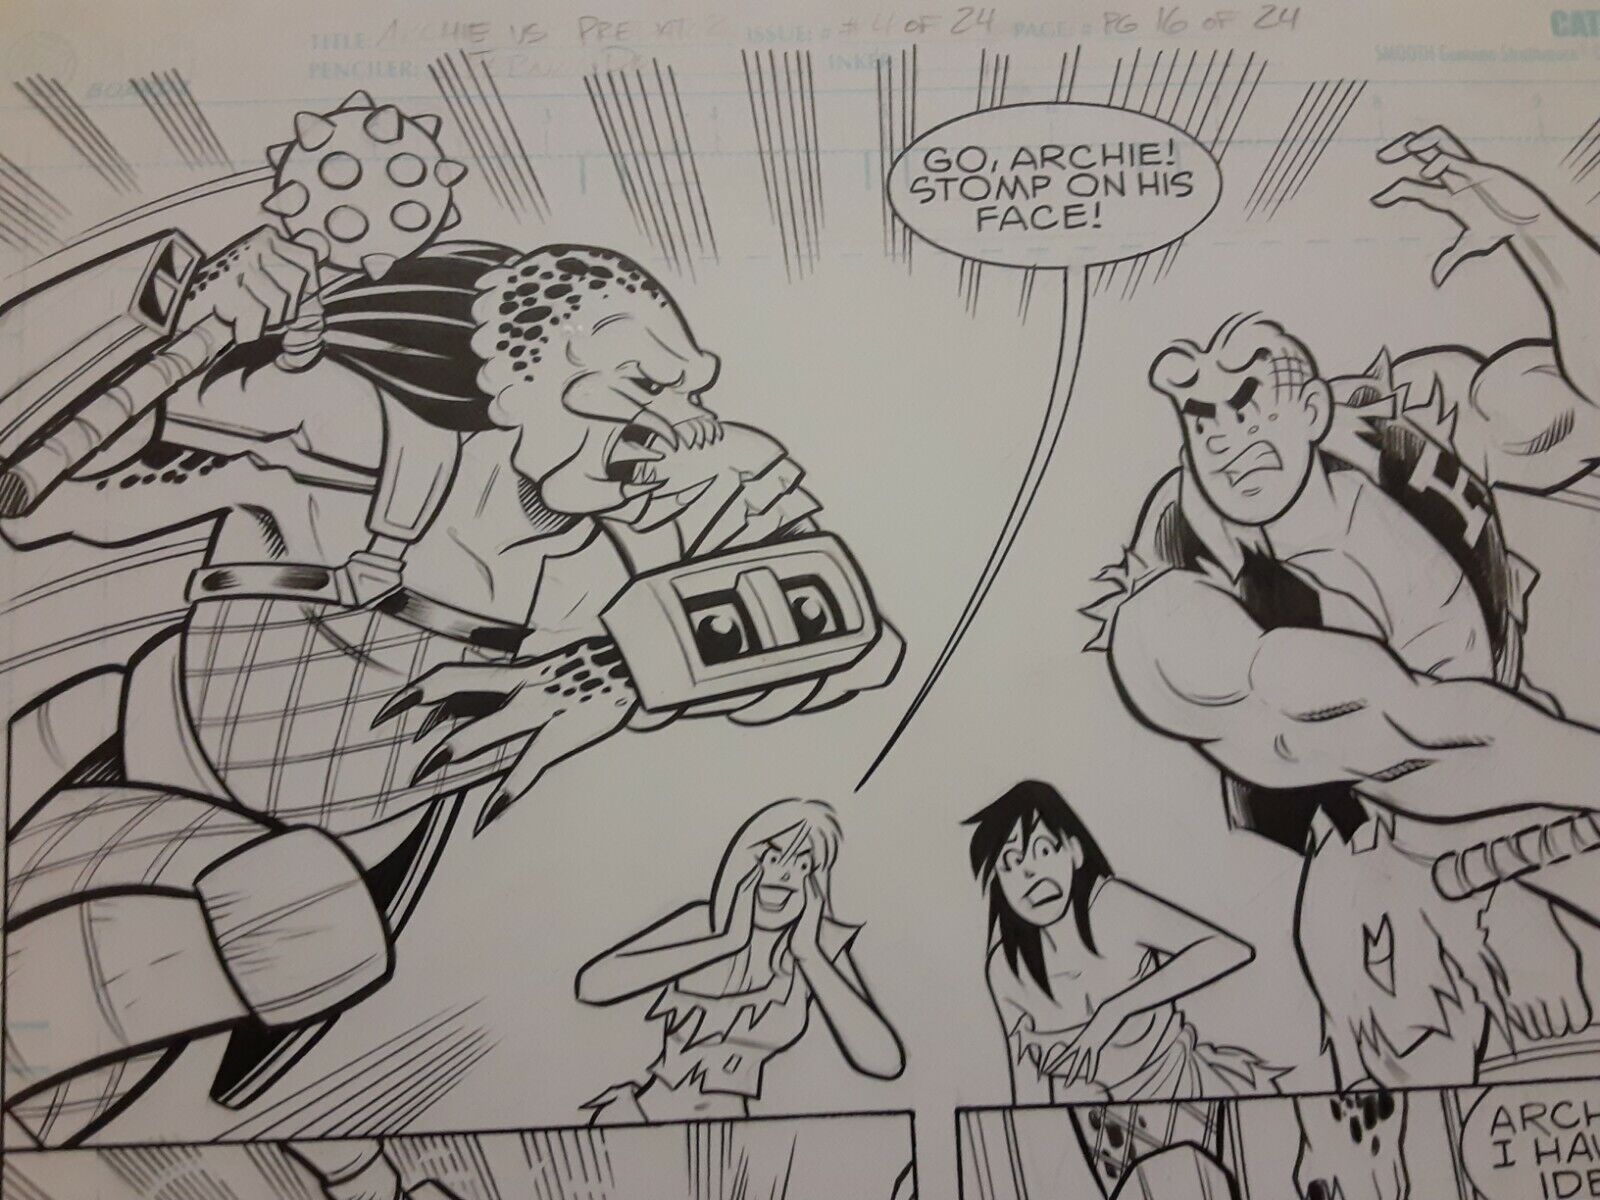 Archie vs The Predator Original Comic Book Art Page Signed